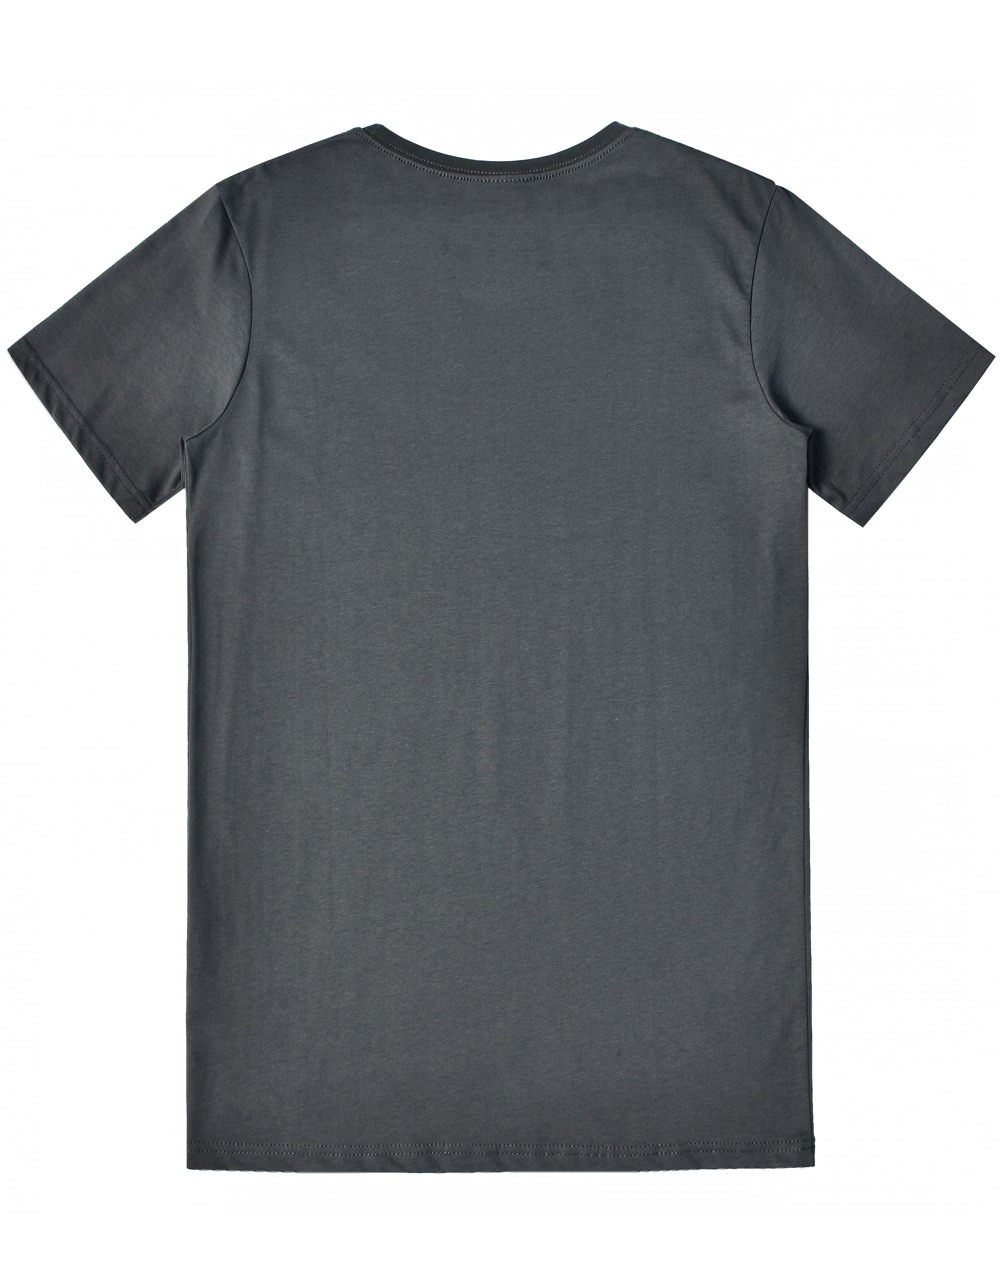 Custom Printed Premium T-Shirts Men's (Charcoal) Online in Perth Australia